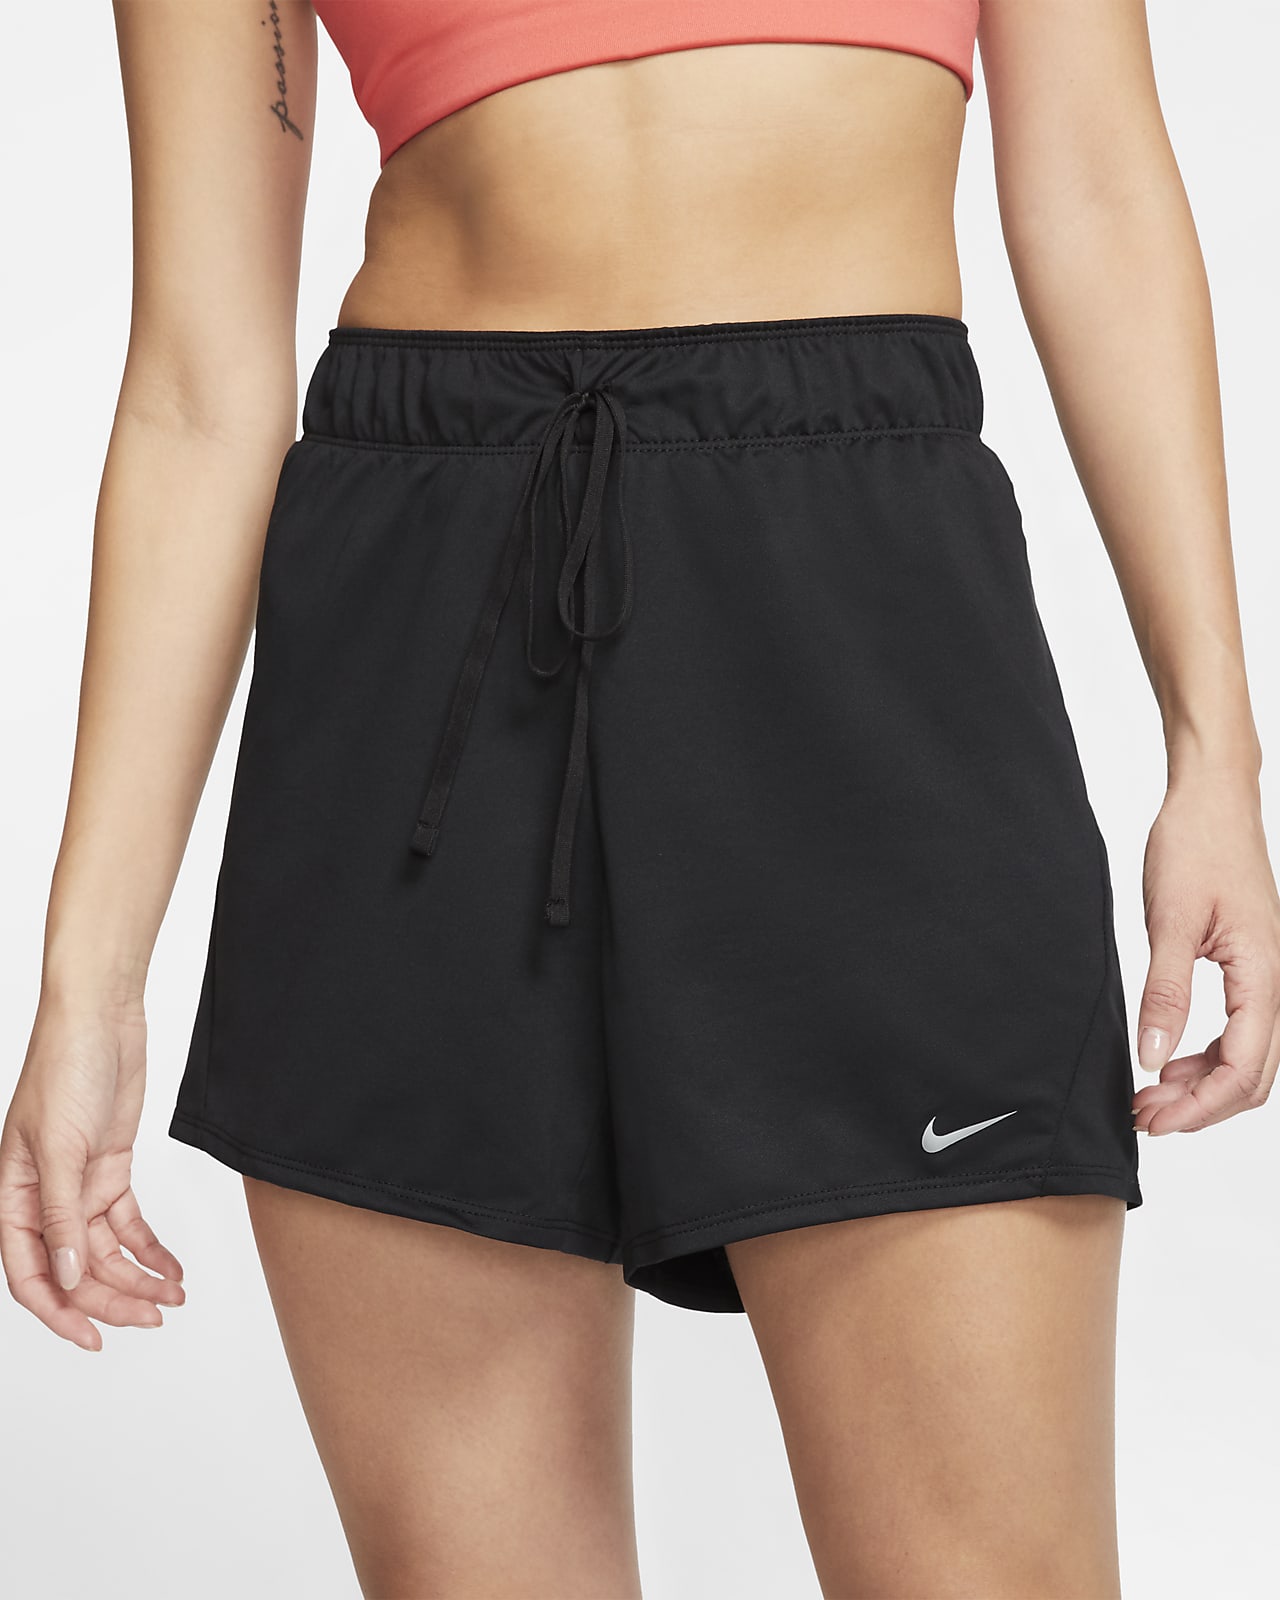 nike women's workout shorts